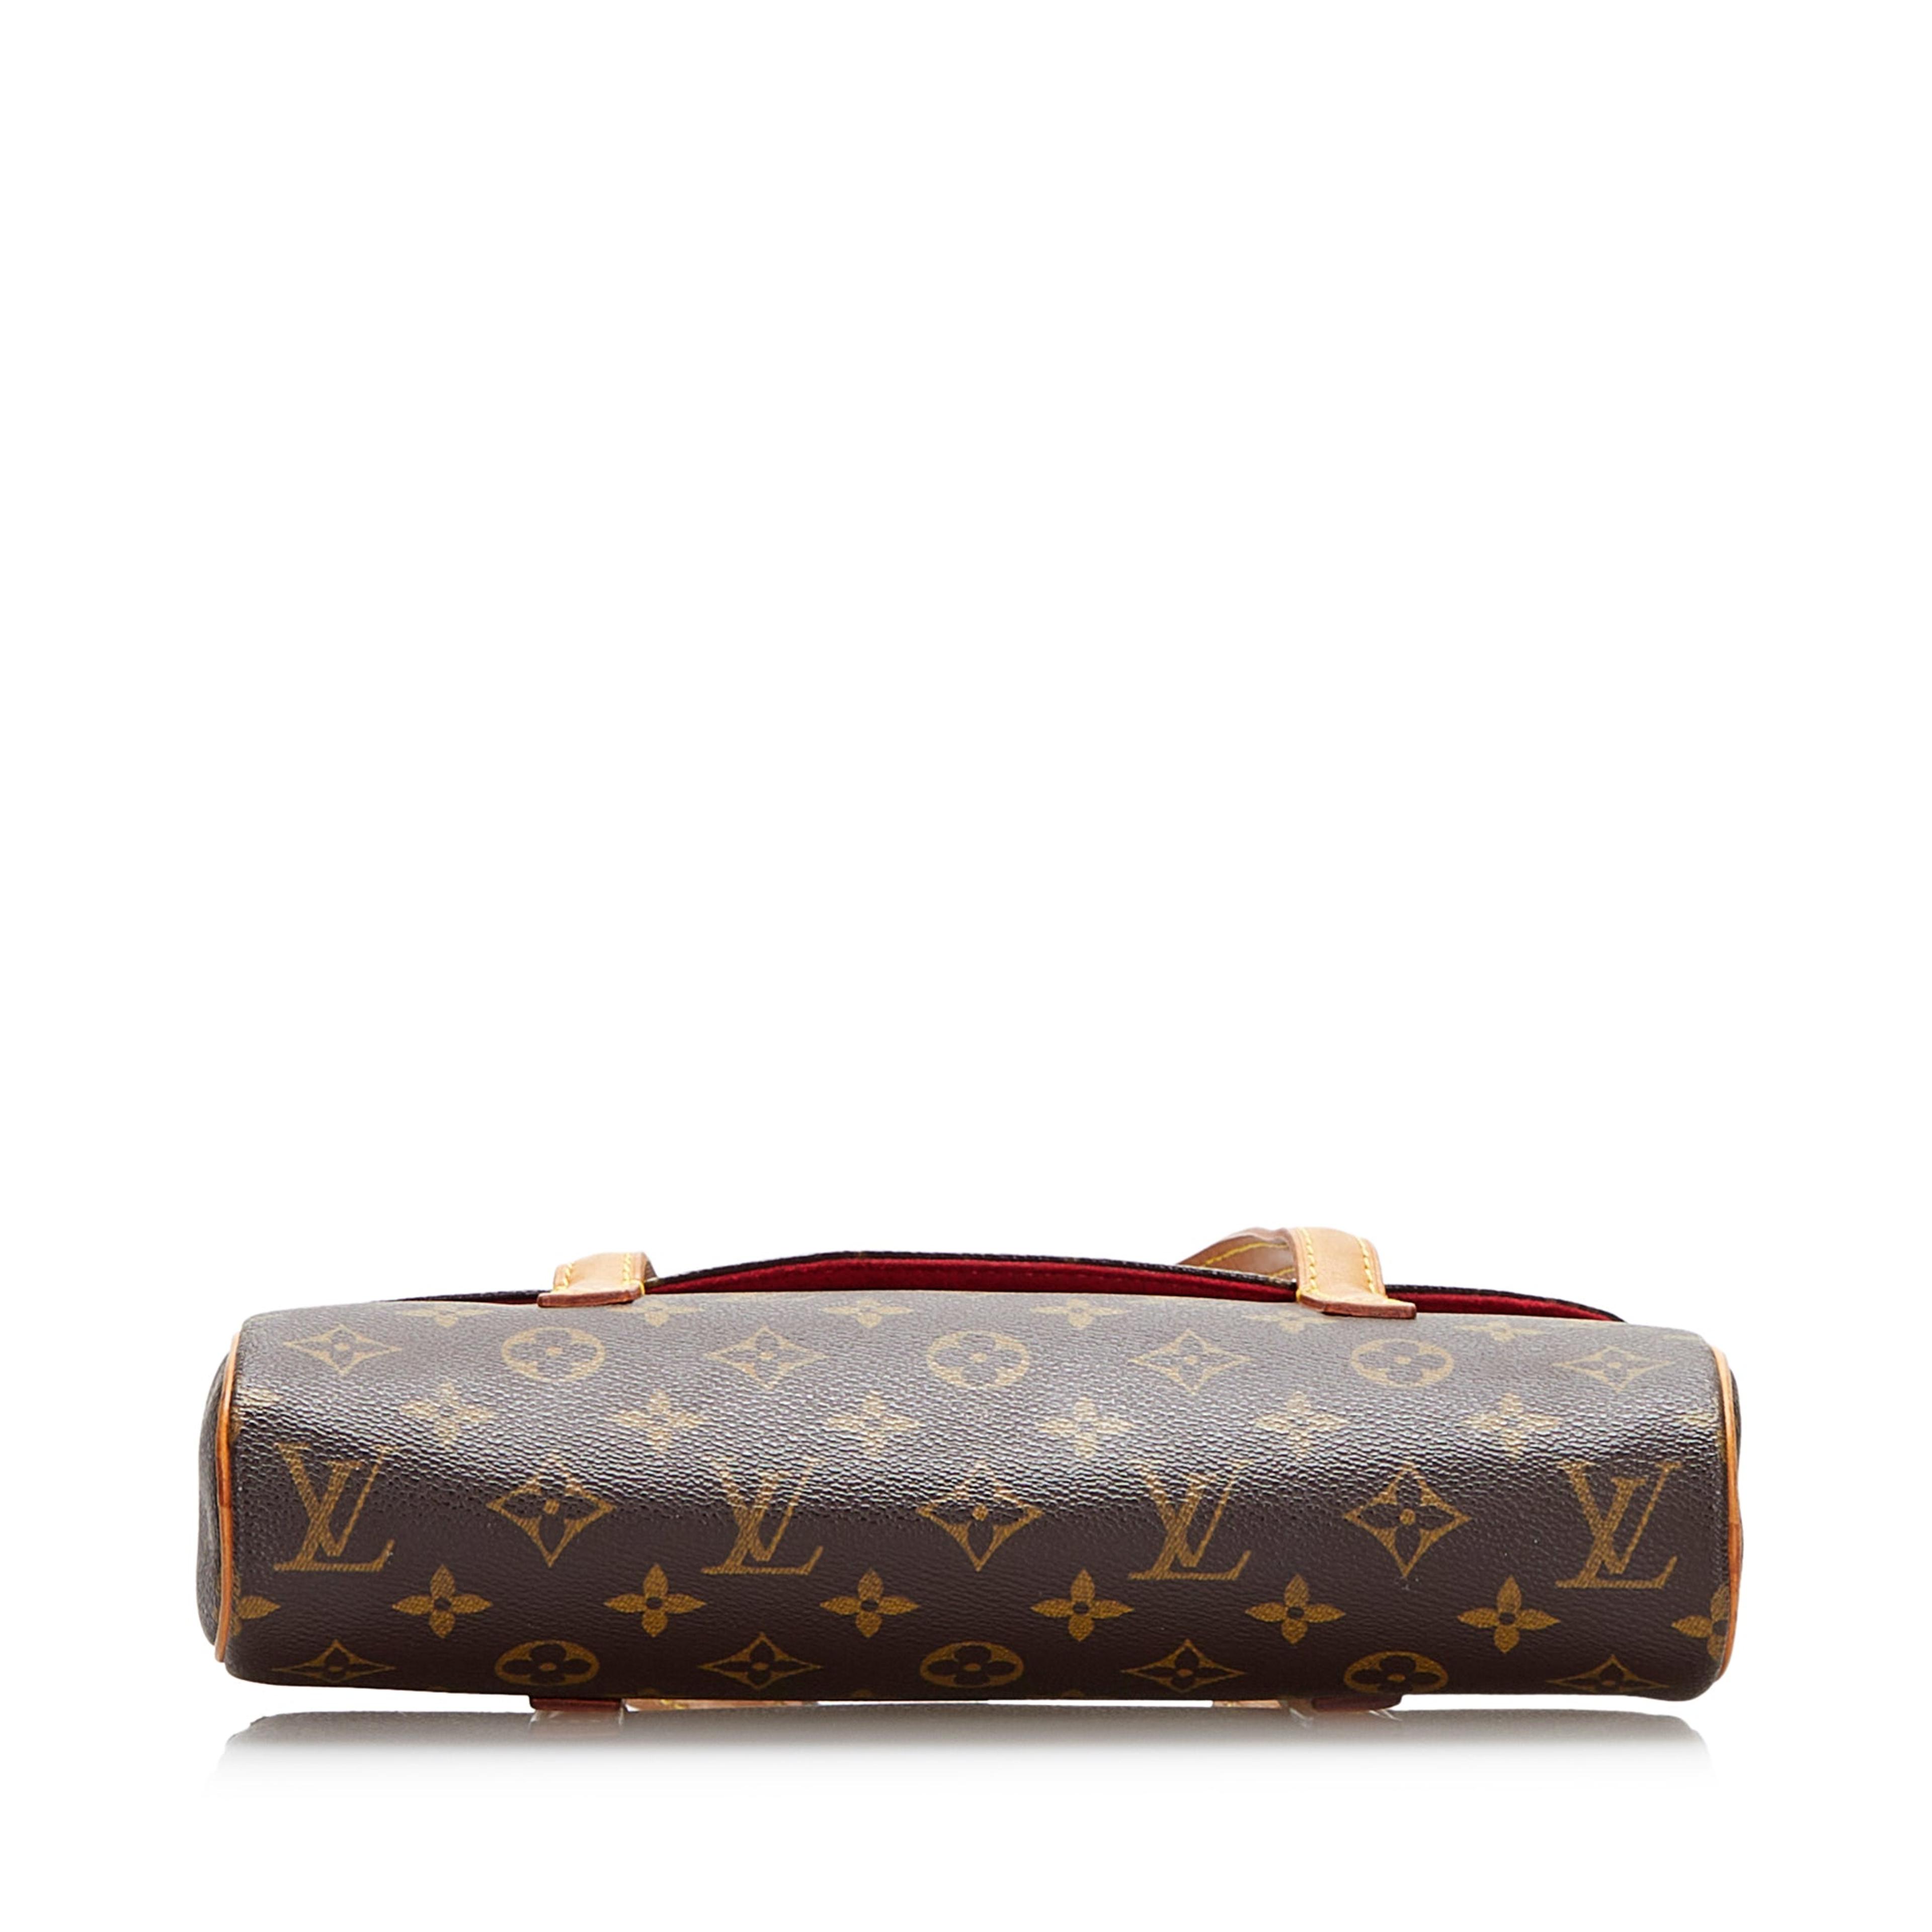 Louis Vuitton Sonatine Canvas Handbag